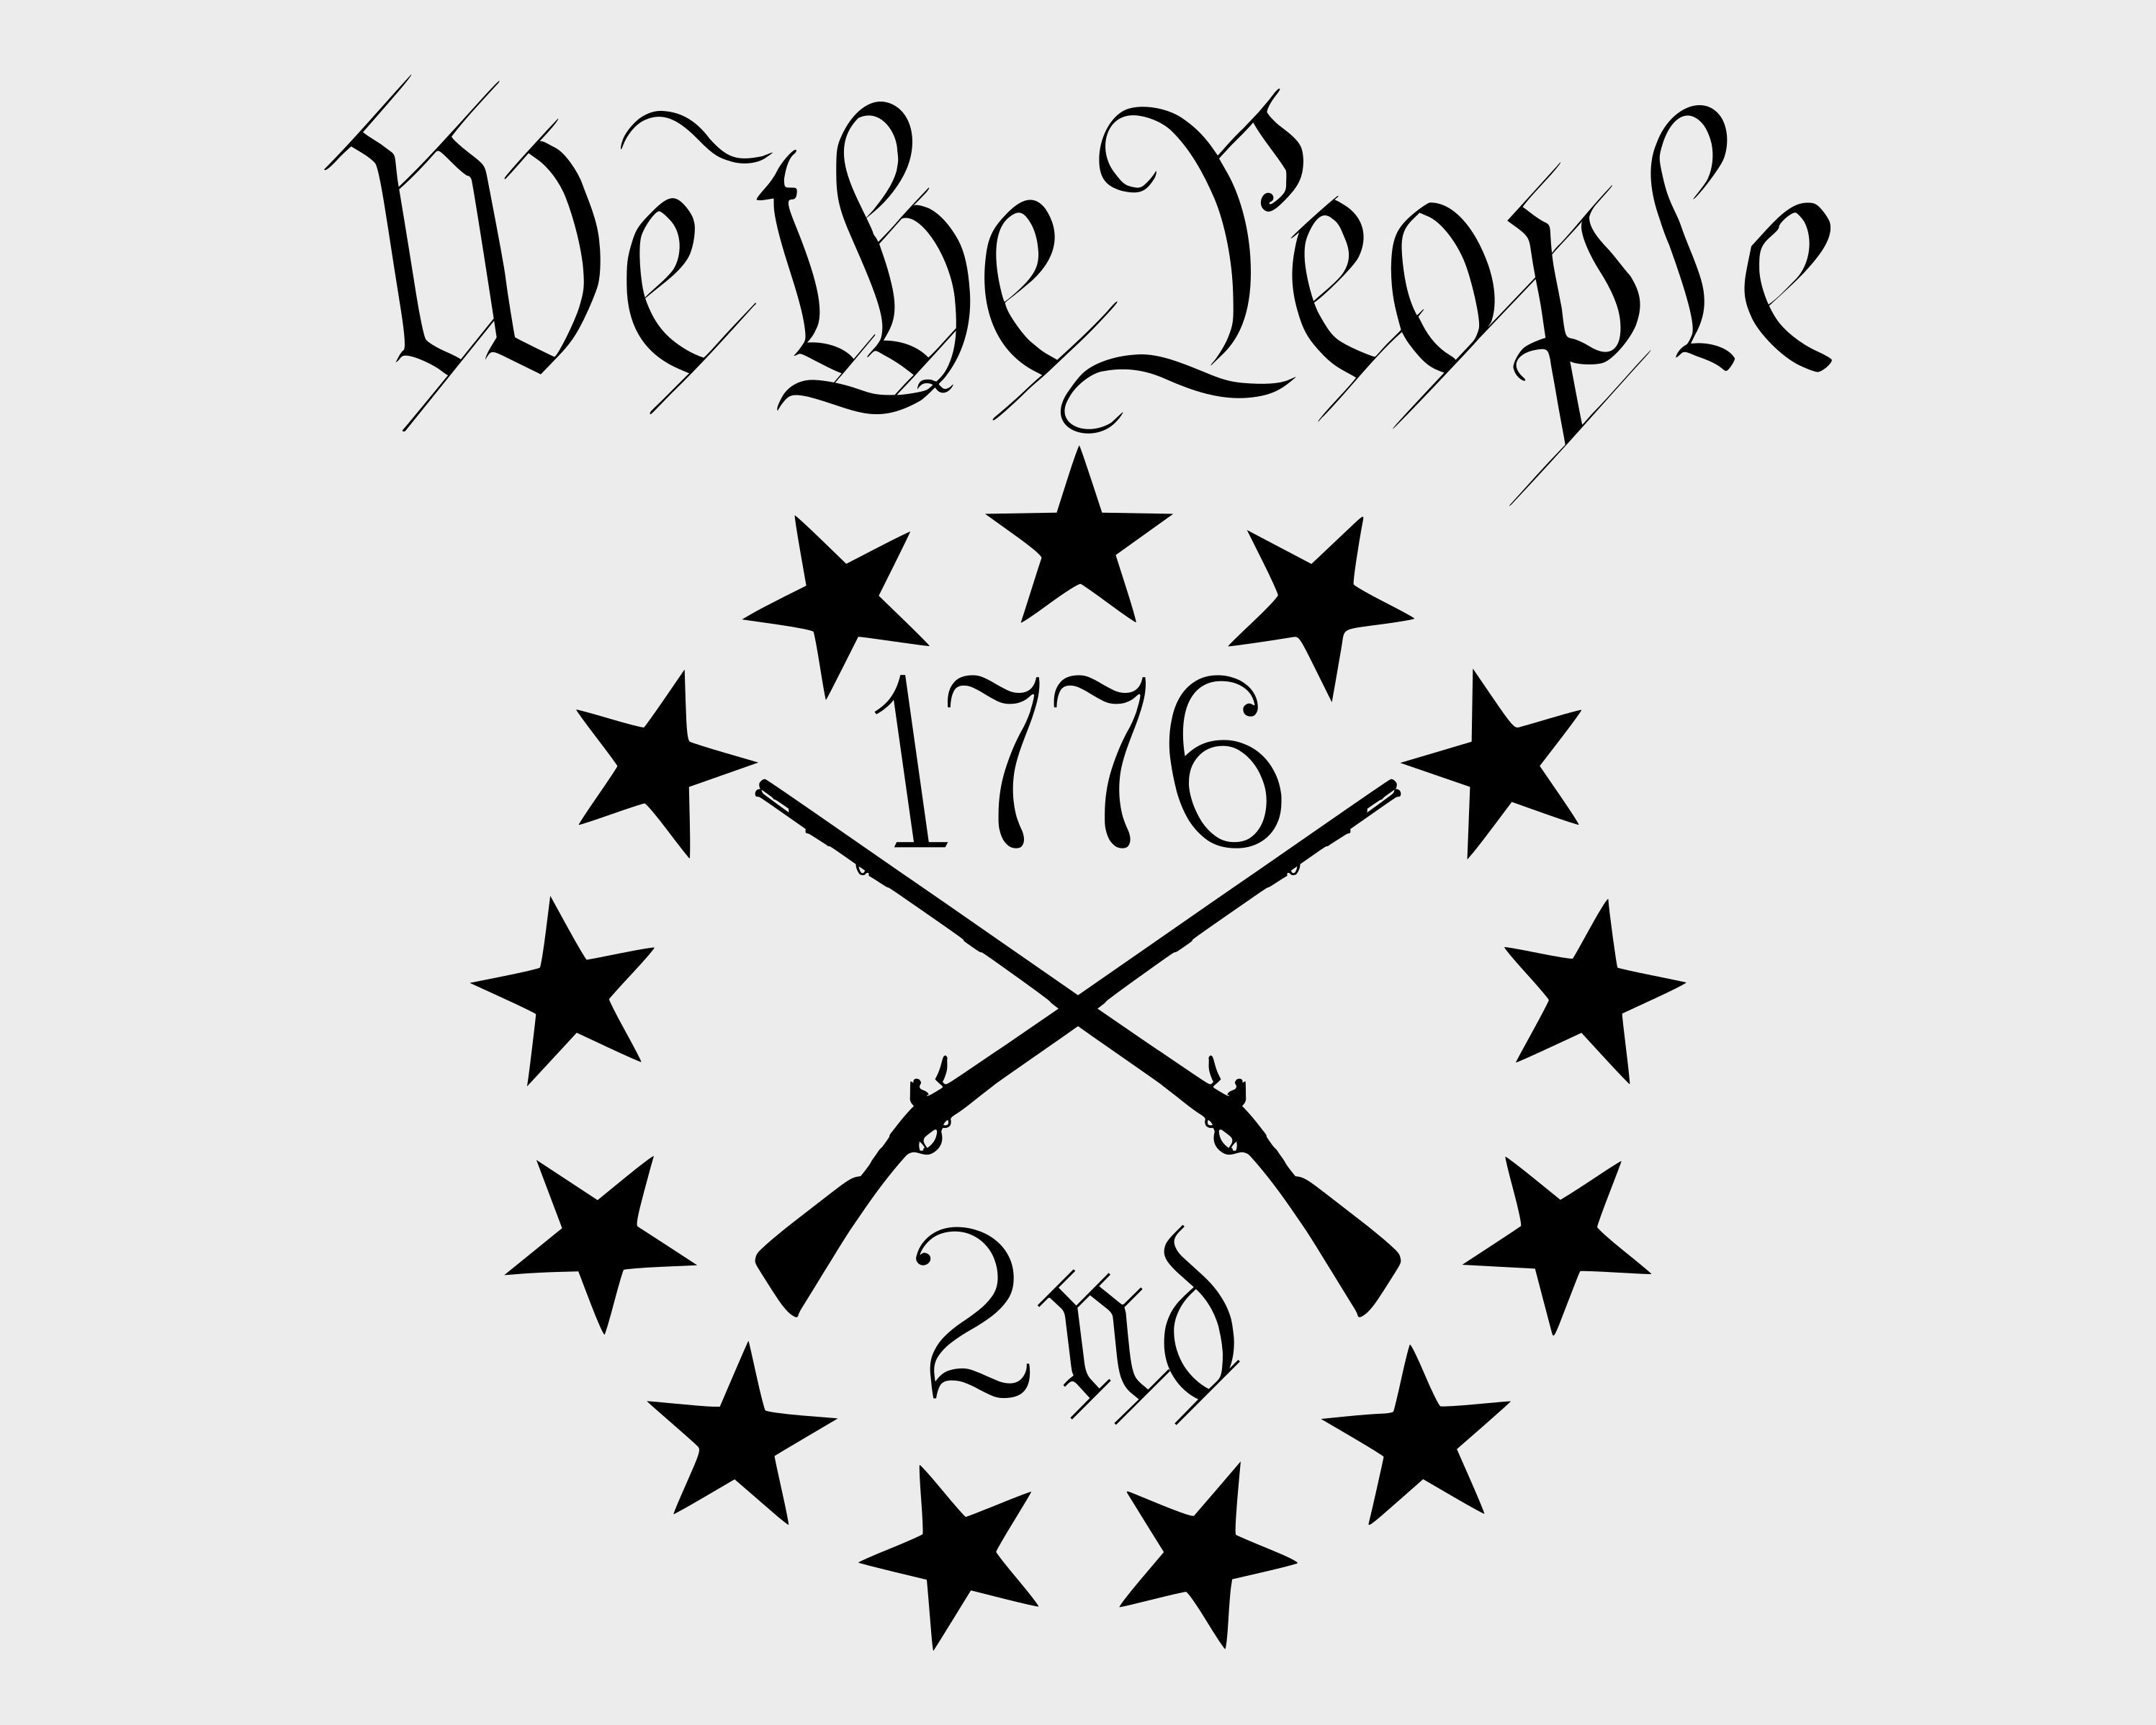 Papercraft Embellishments EPS 2nd Amendment Star Circle Logo SVG 1776 ...